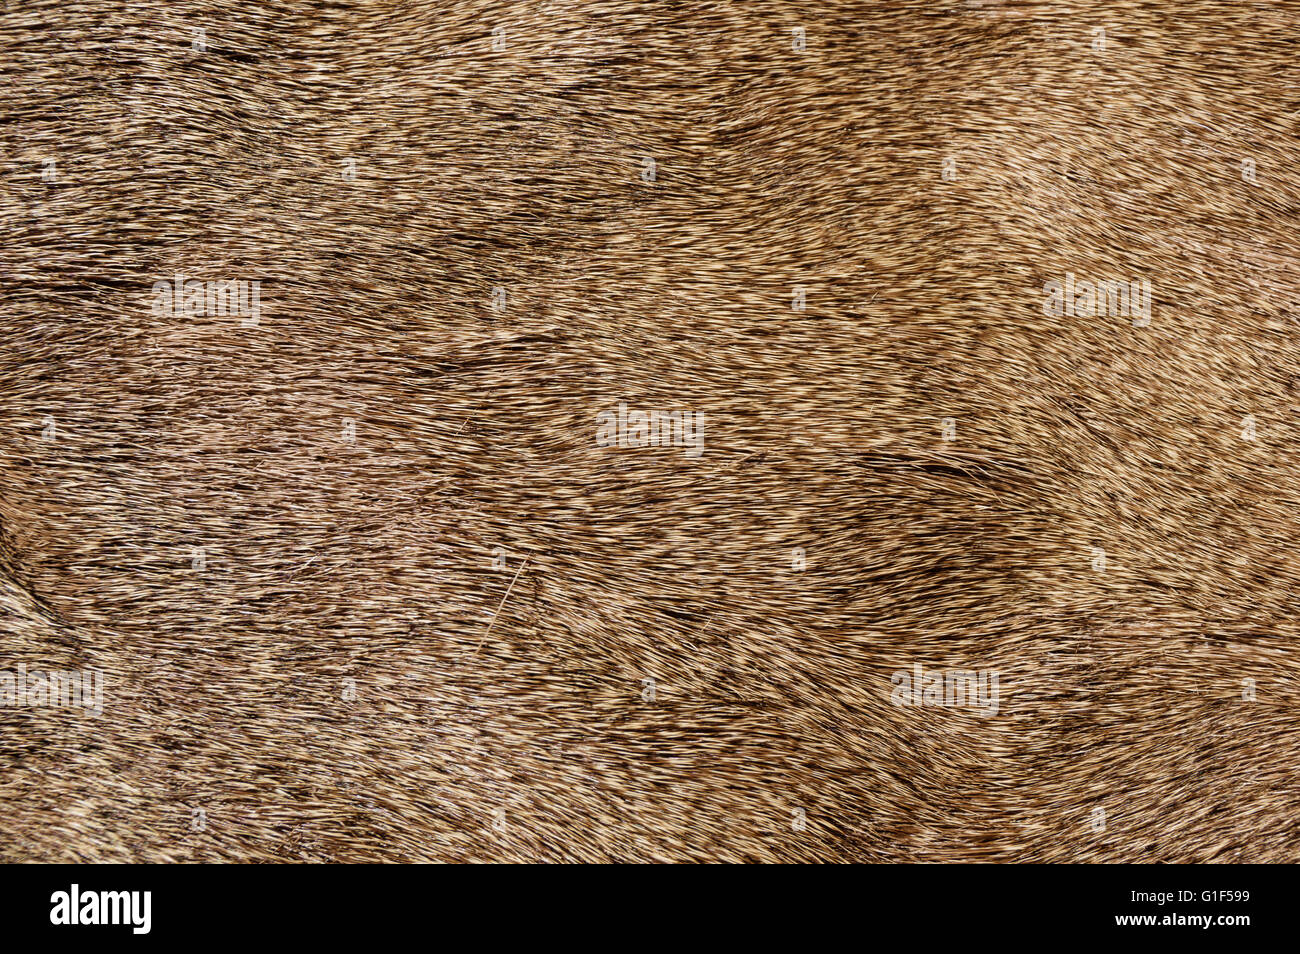 mule deer fur background texture image Stock Photo